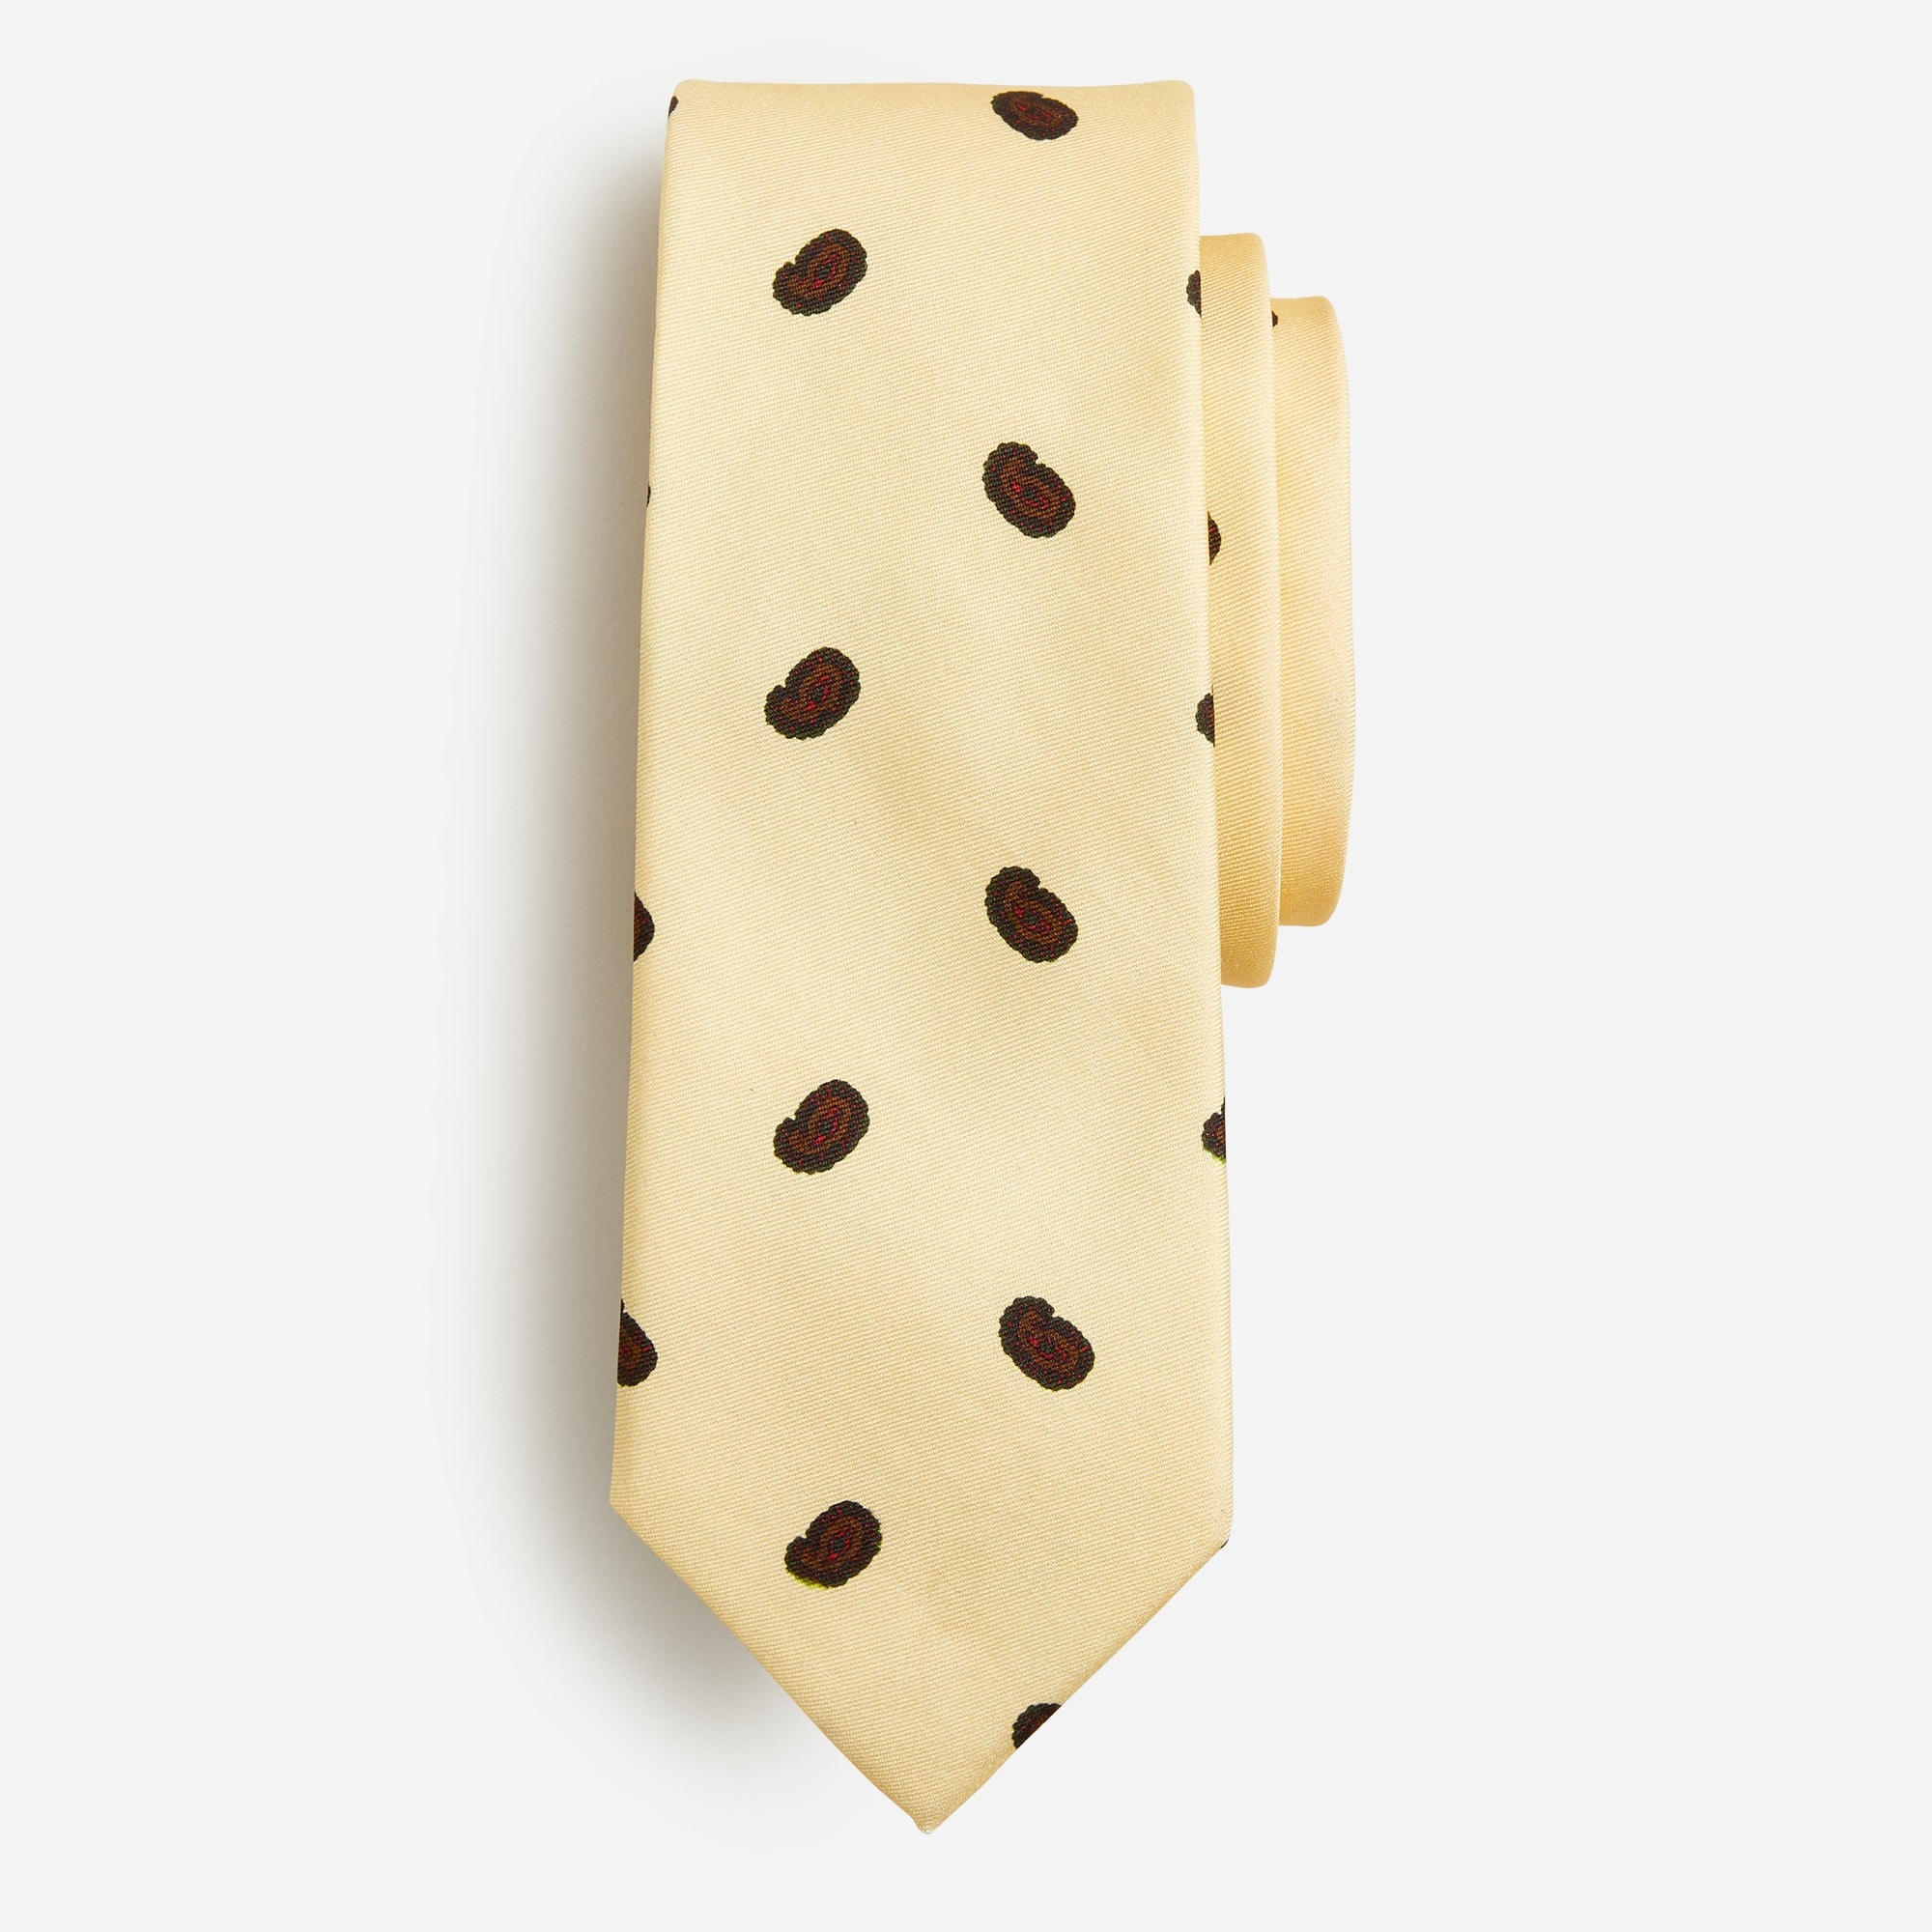  English silk tie in paisley